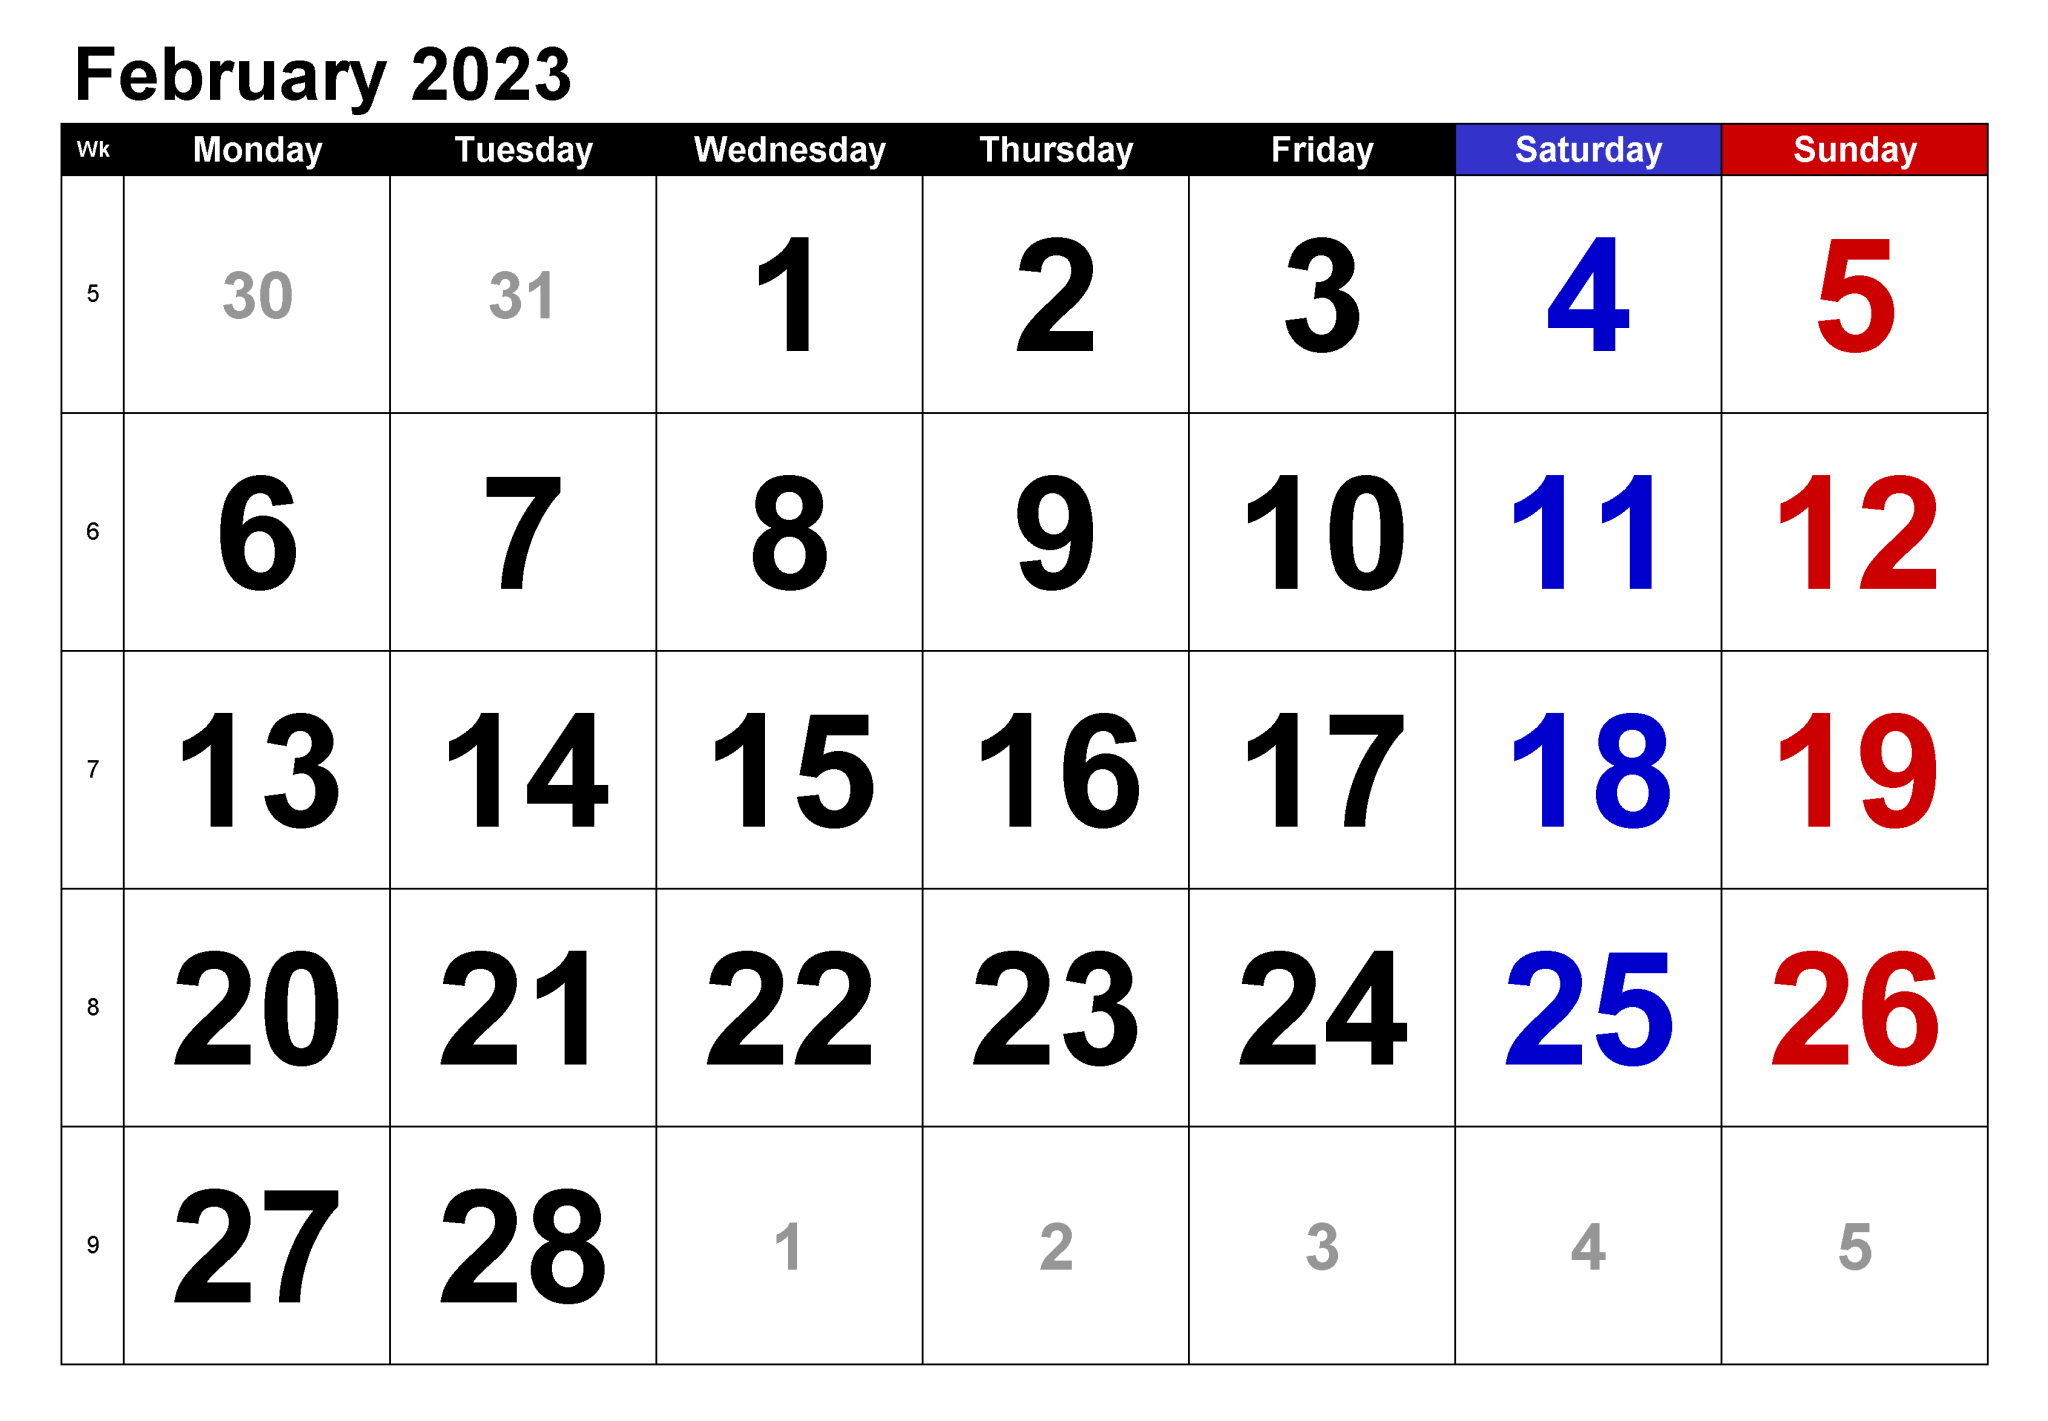 February 2023 Calendar - Celebrate President's Day